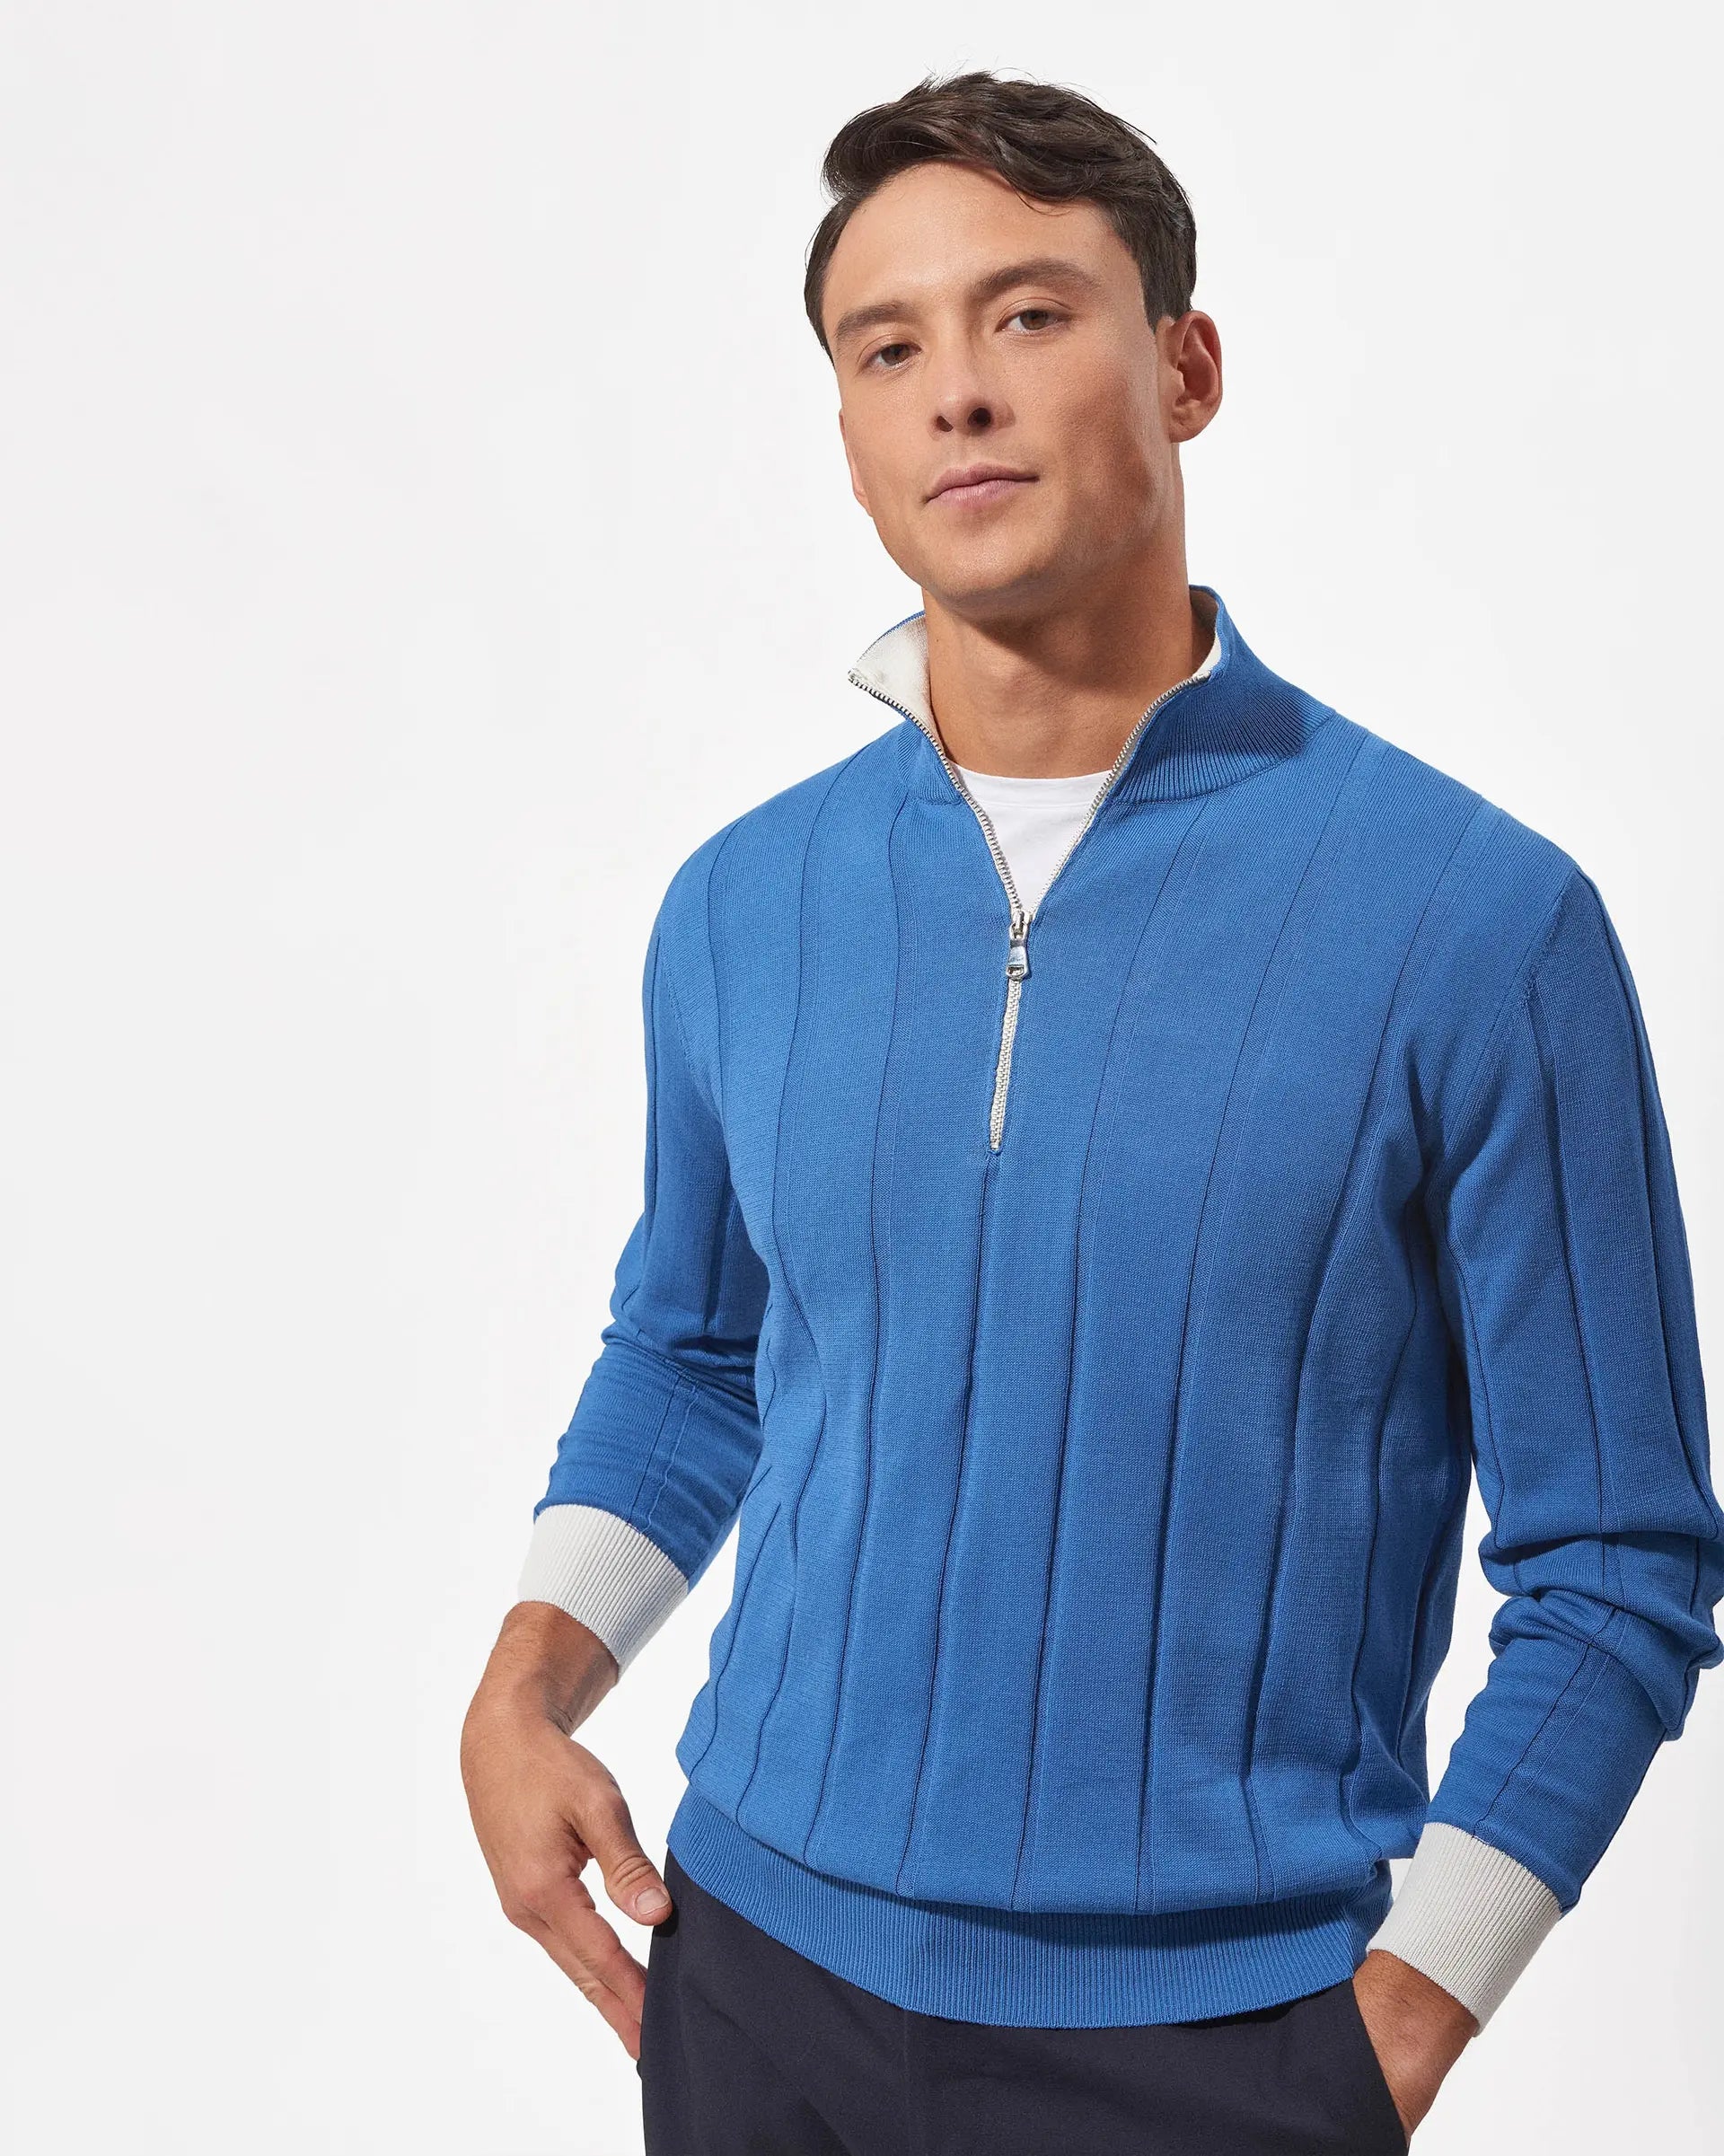 Avion Blue Cotton Half-Zip Sweater - 12 gauge